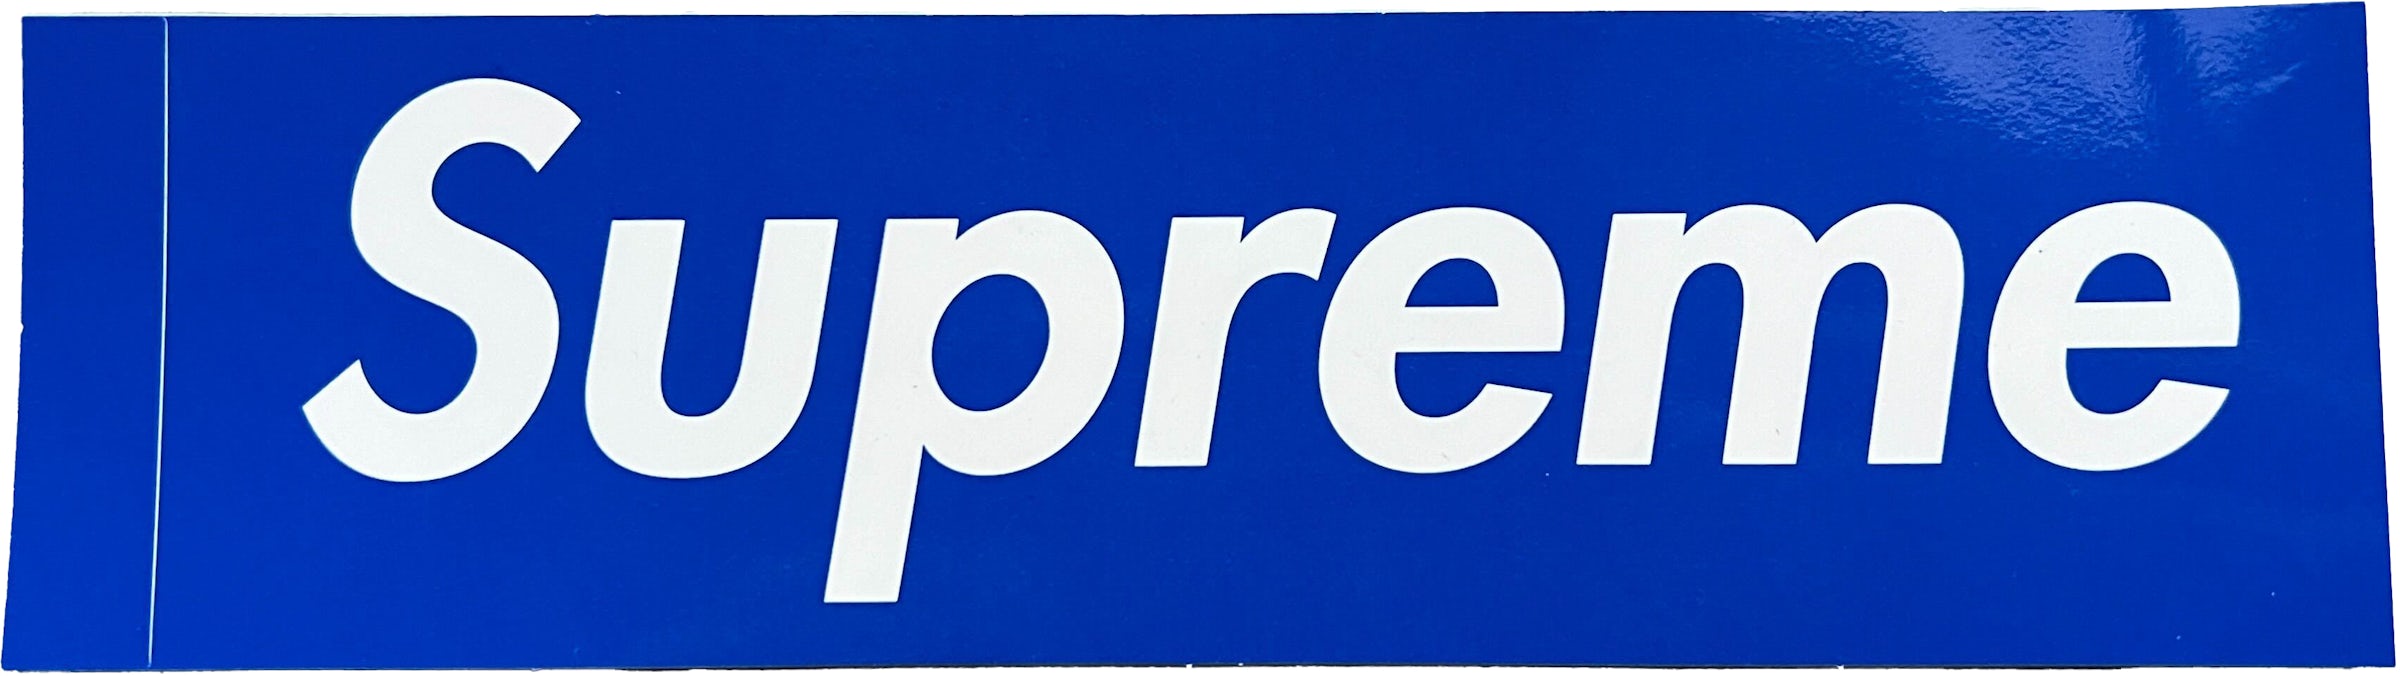 Supreme Seoul Box Logo Sticker - US